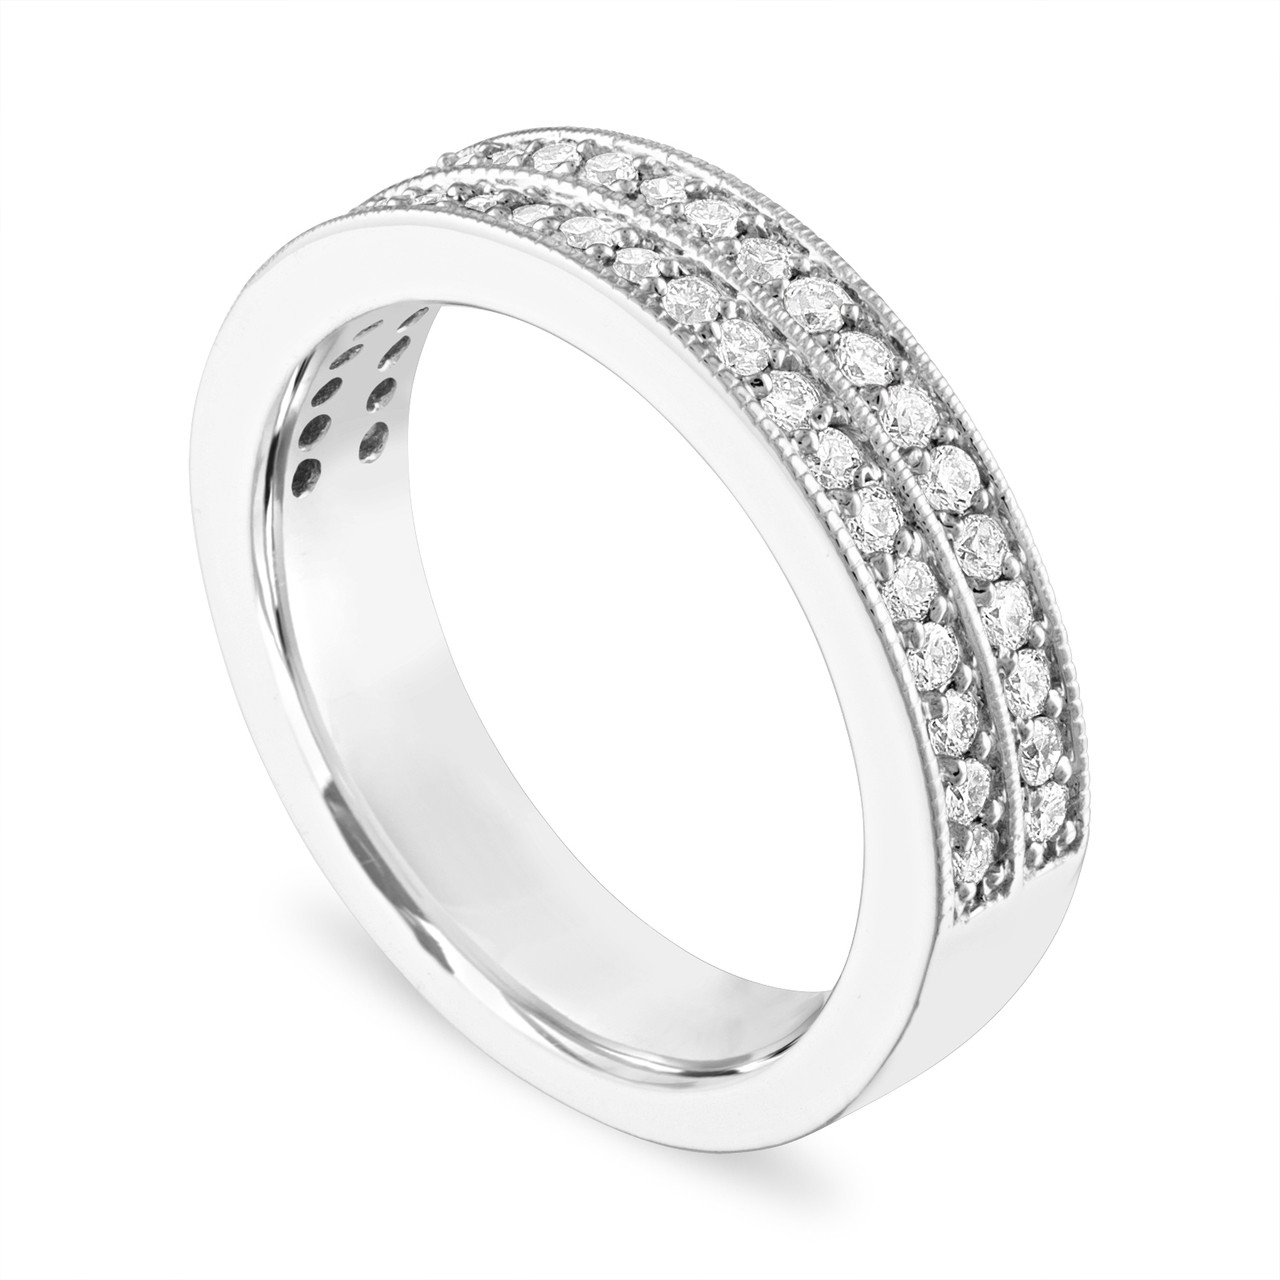 Diamond Wedding Ring 18K Rose Gold, Half Eternity Diamonds Wedding Band, Two Row 4 mm 0.45 Carat Handmade